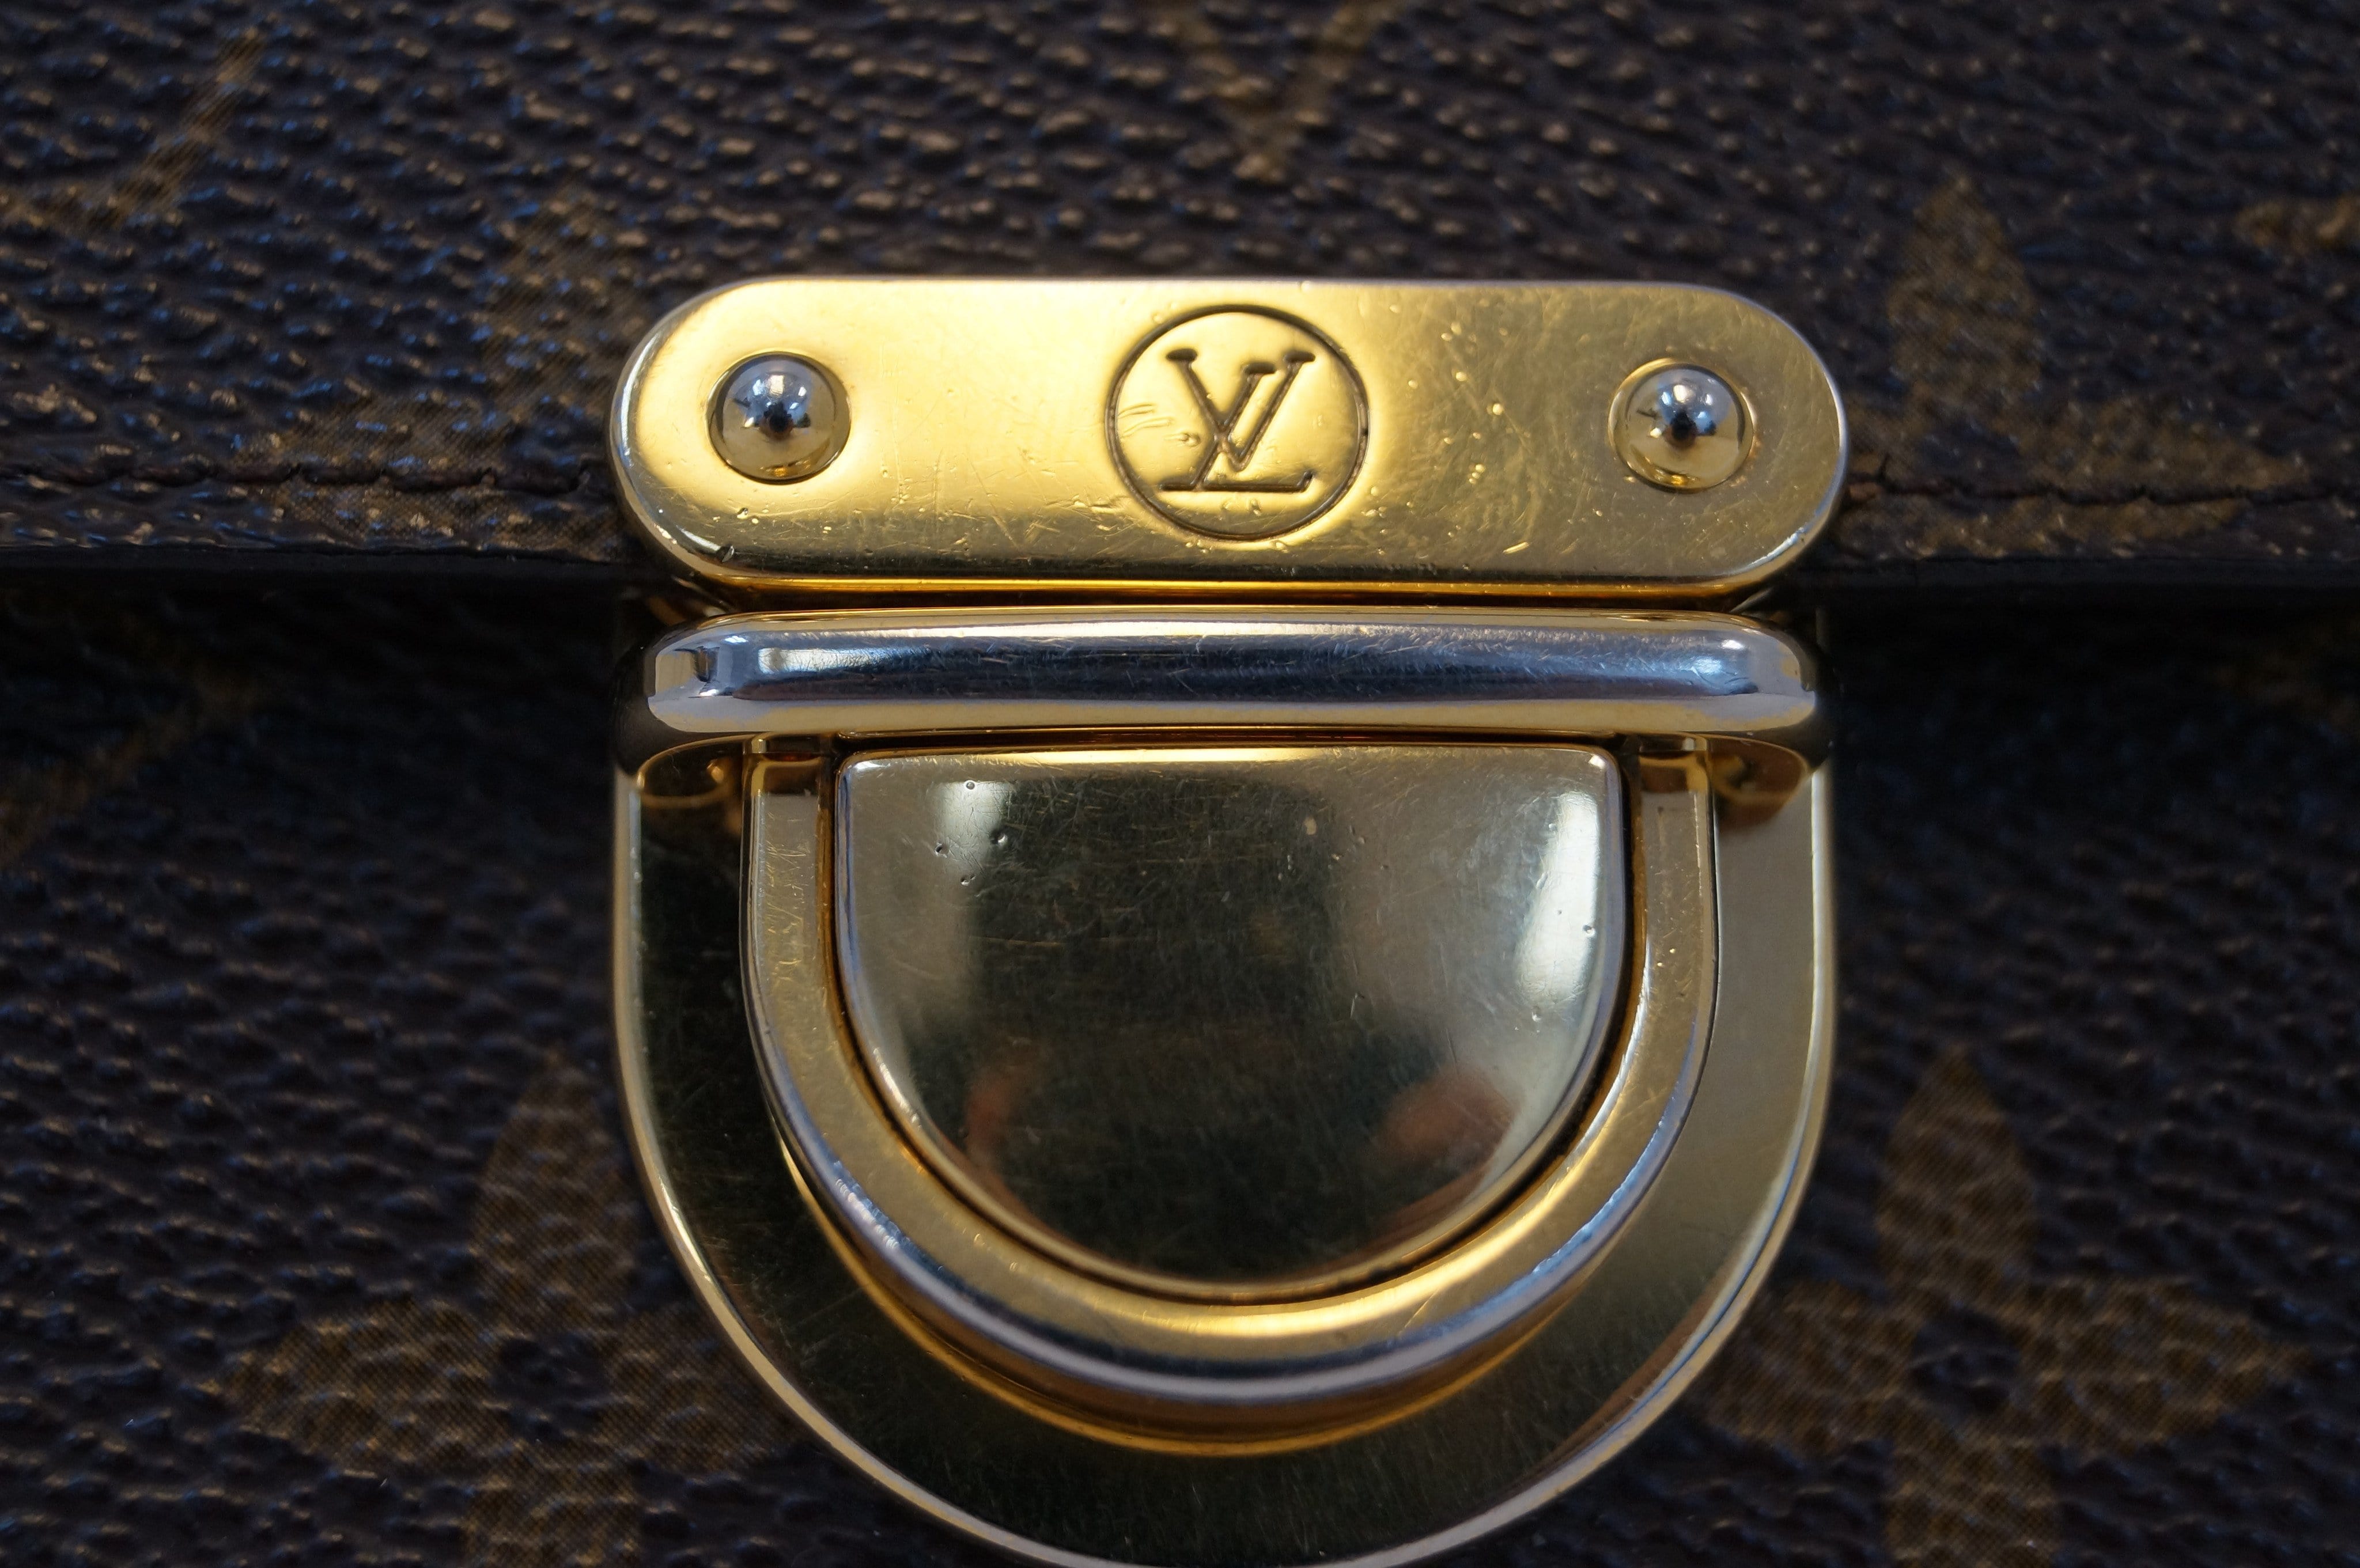 Louis Vuitton Multicolor Koala Wallet Black ○ Labellov ○ Buy and